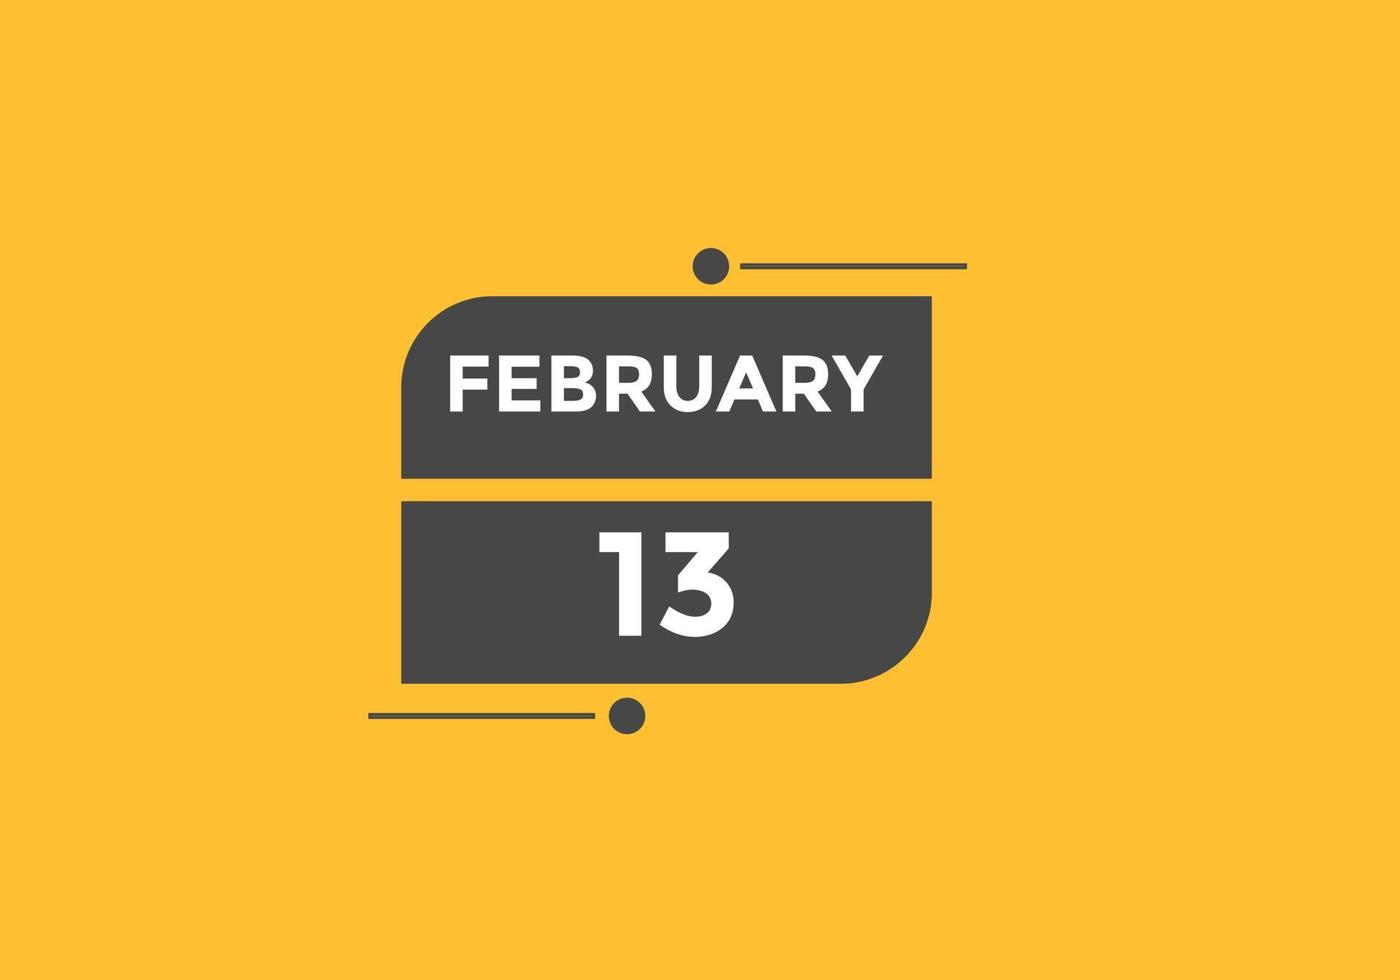 13. Februar Kalendererinnerung. 13. februar tägliche kalendersymbolvorlage. Kalender 13. Februar Icon-Design-Vorlage. Vektor-Illustration vektor